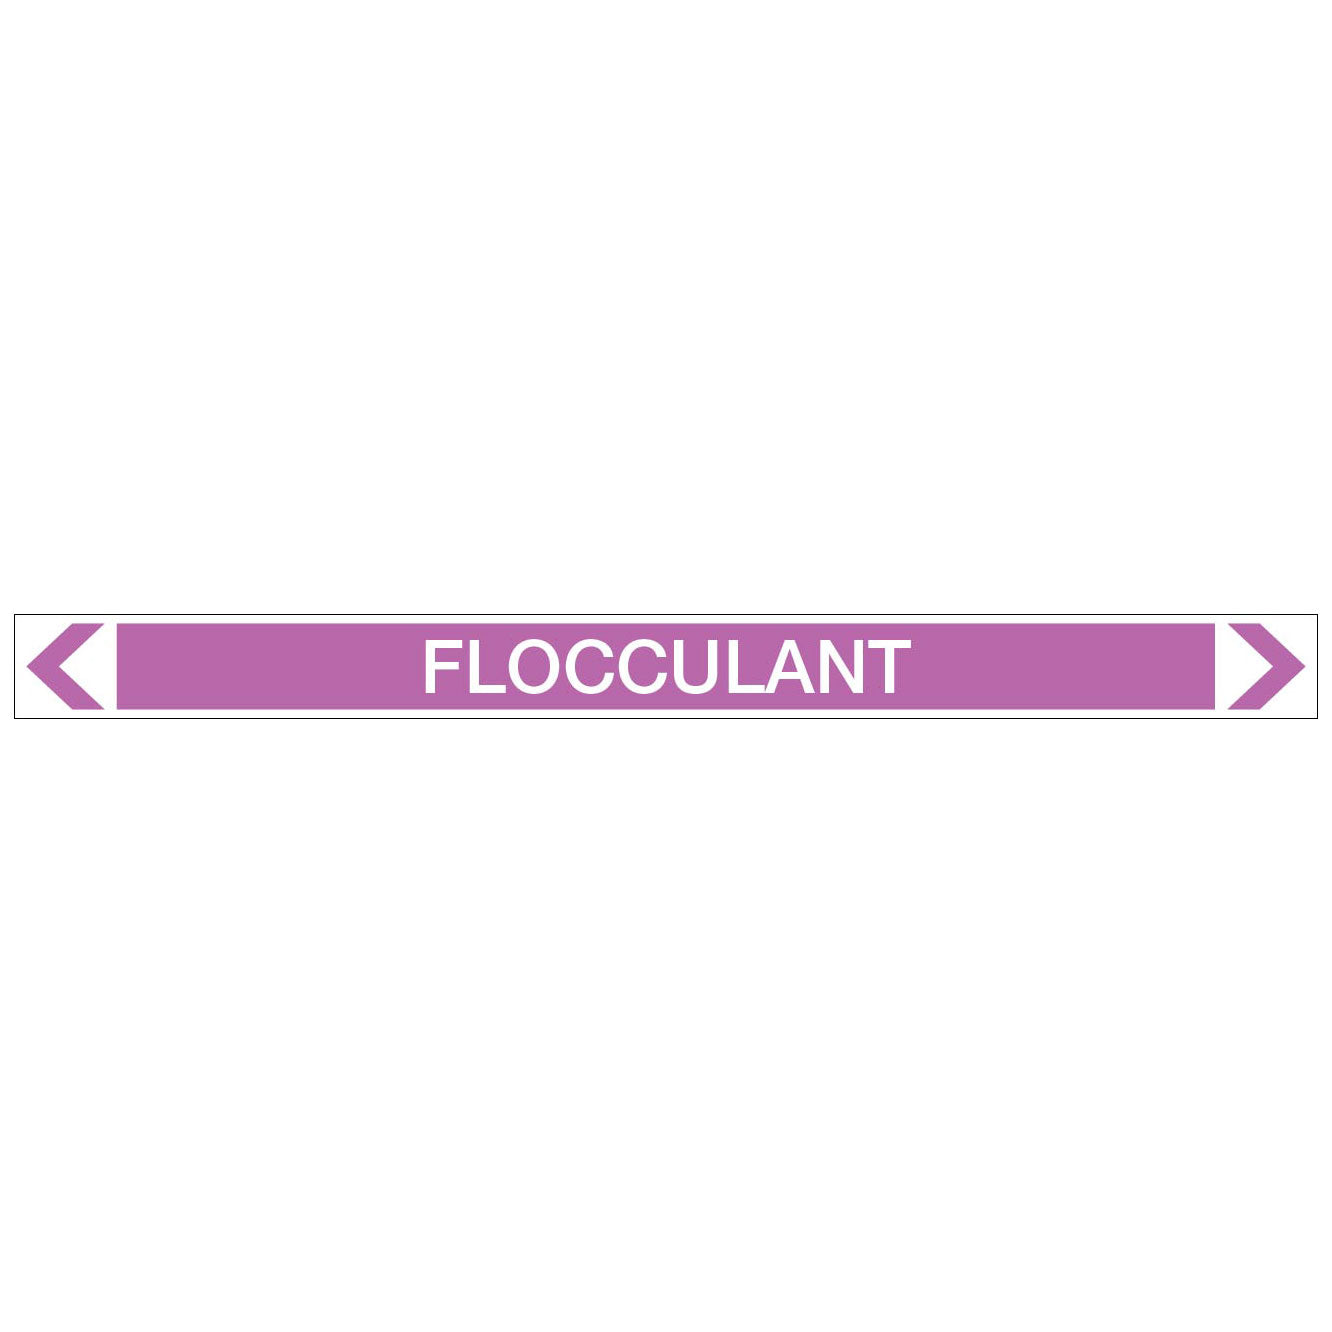 Alkalis / Acids - Flocculant - Pipe Marker Sticker